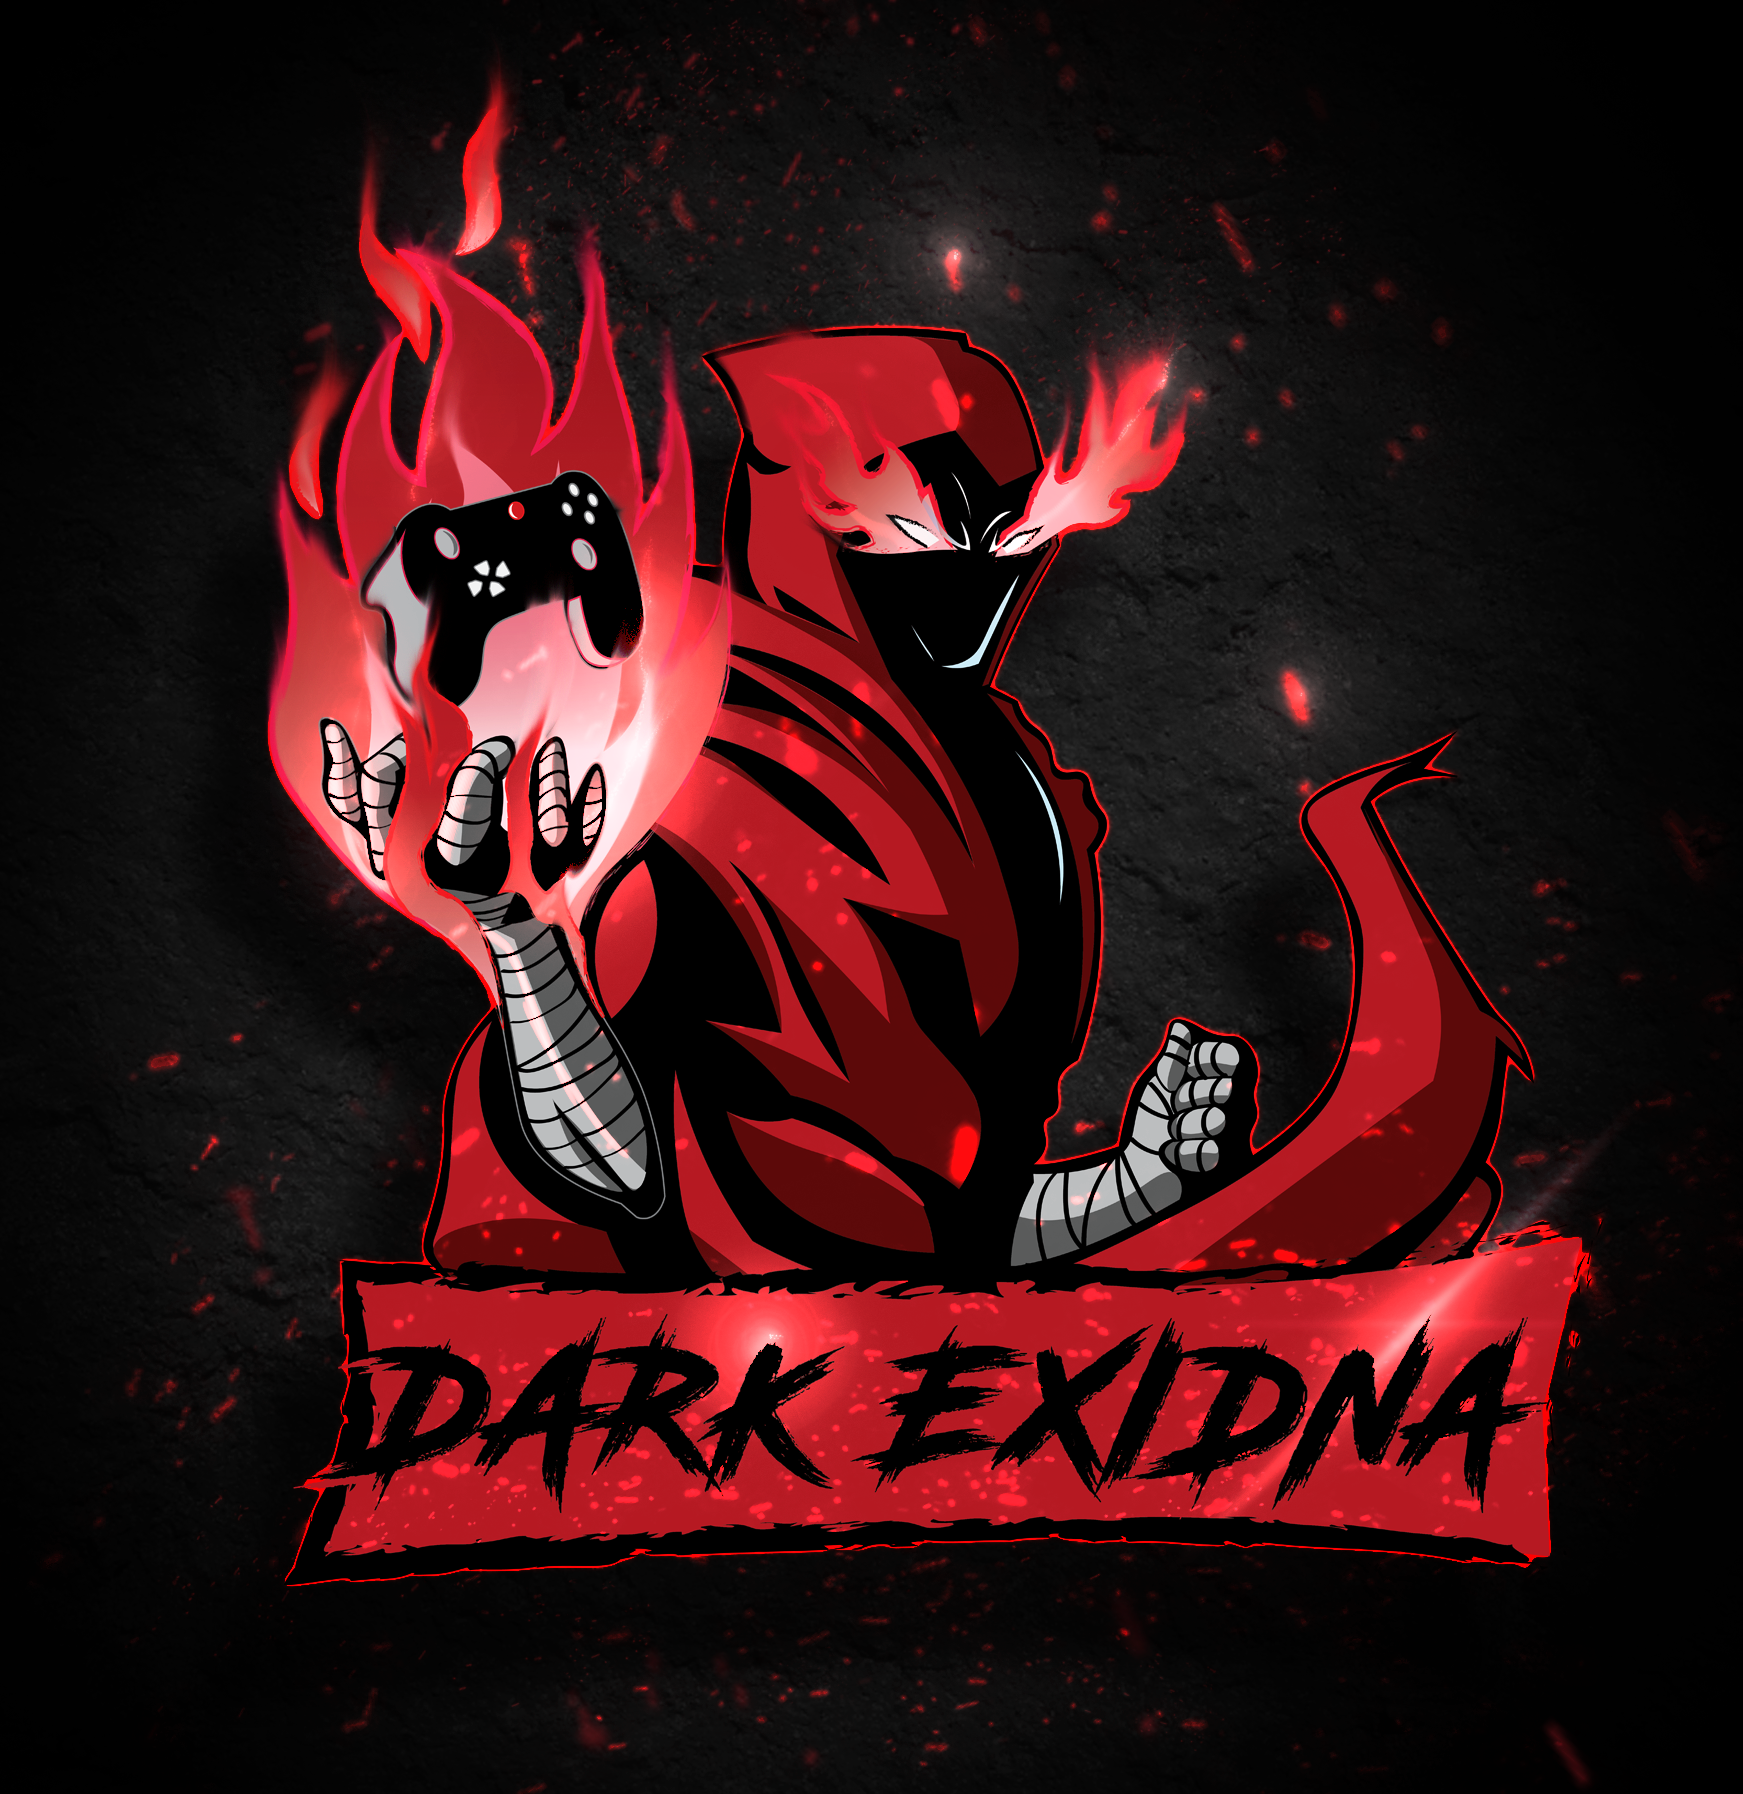 Dark_Exidna